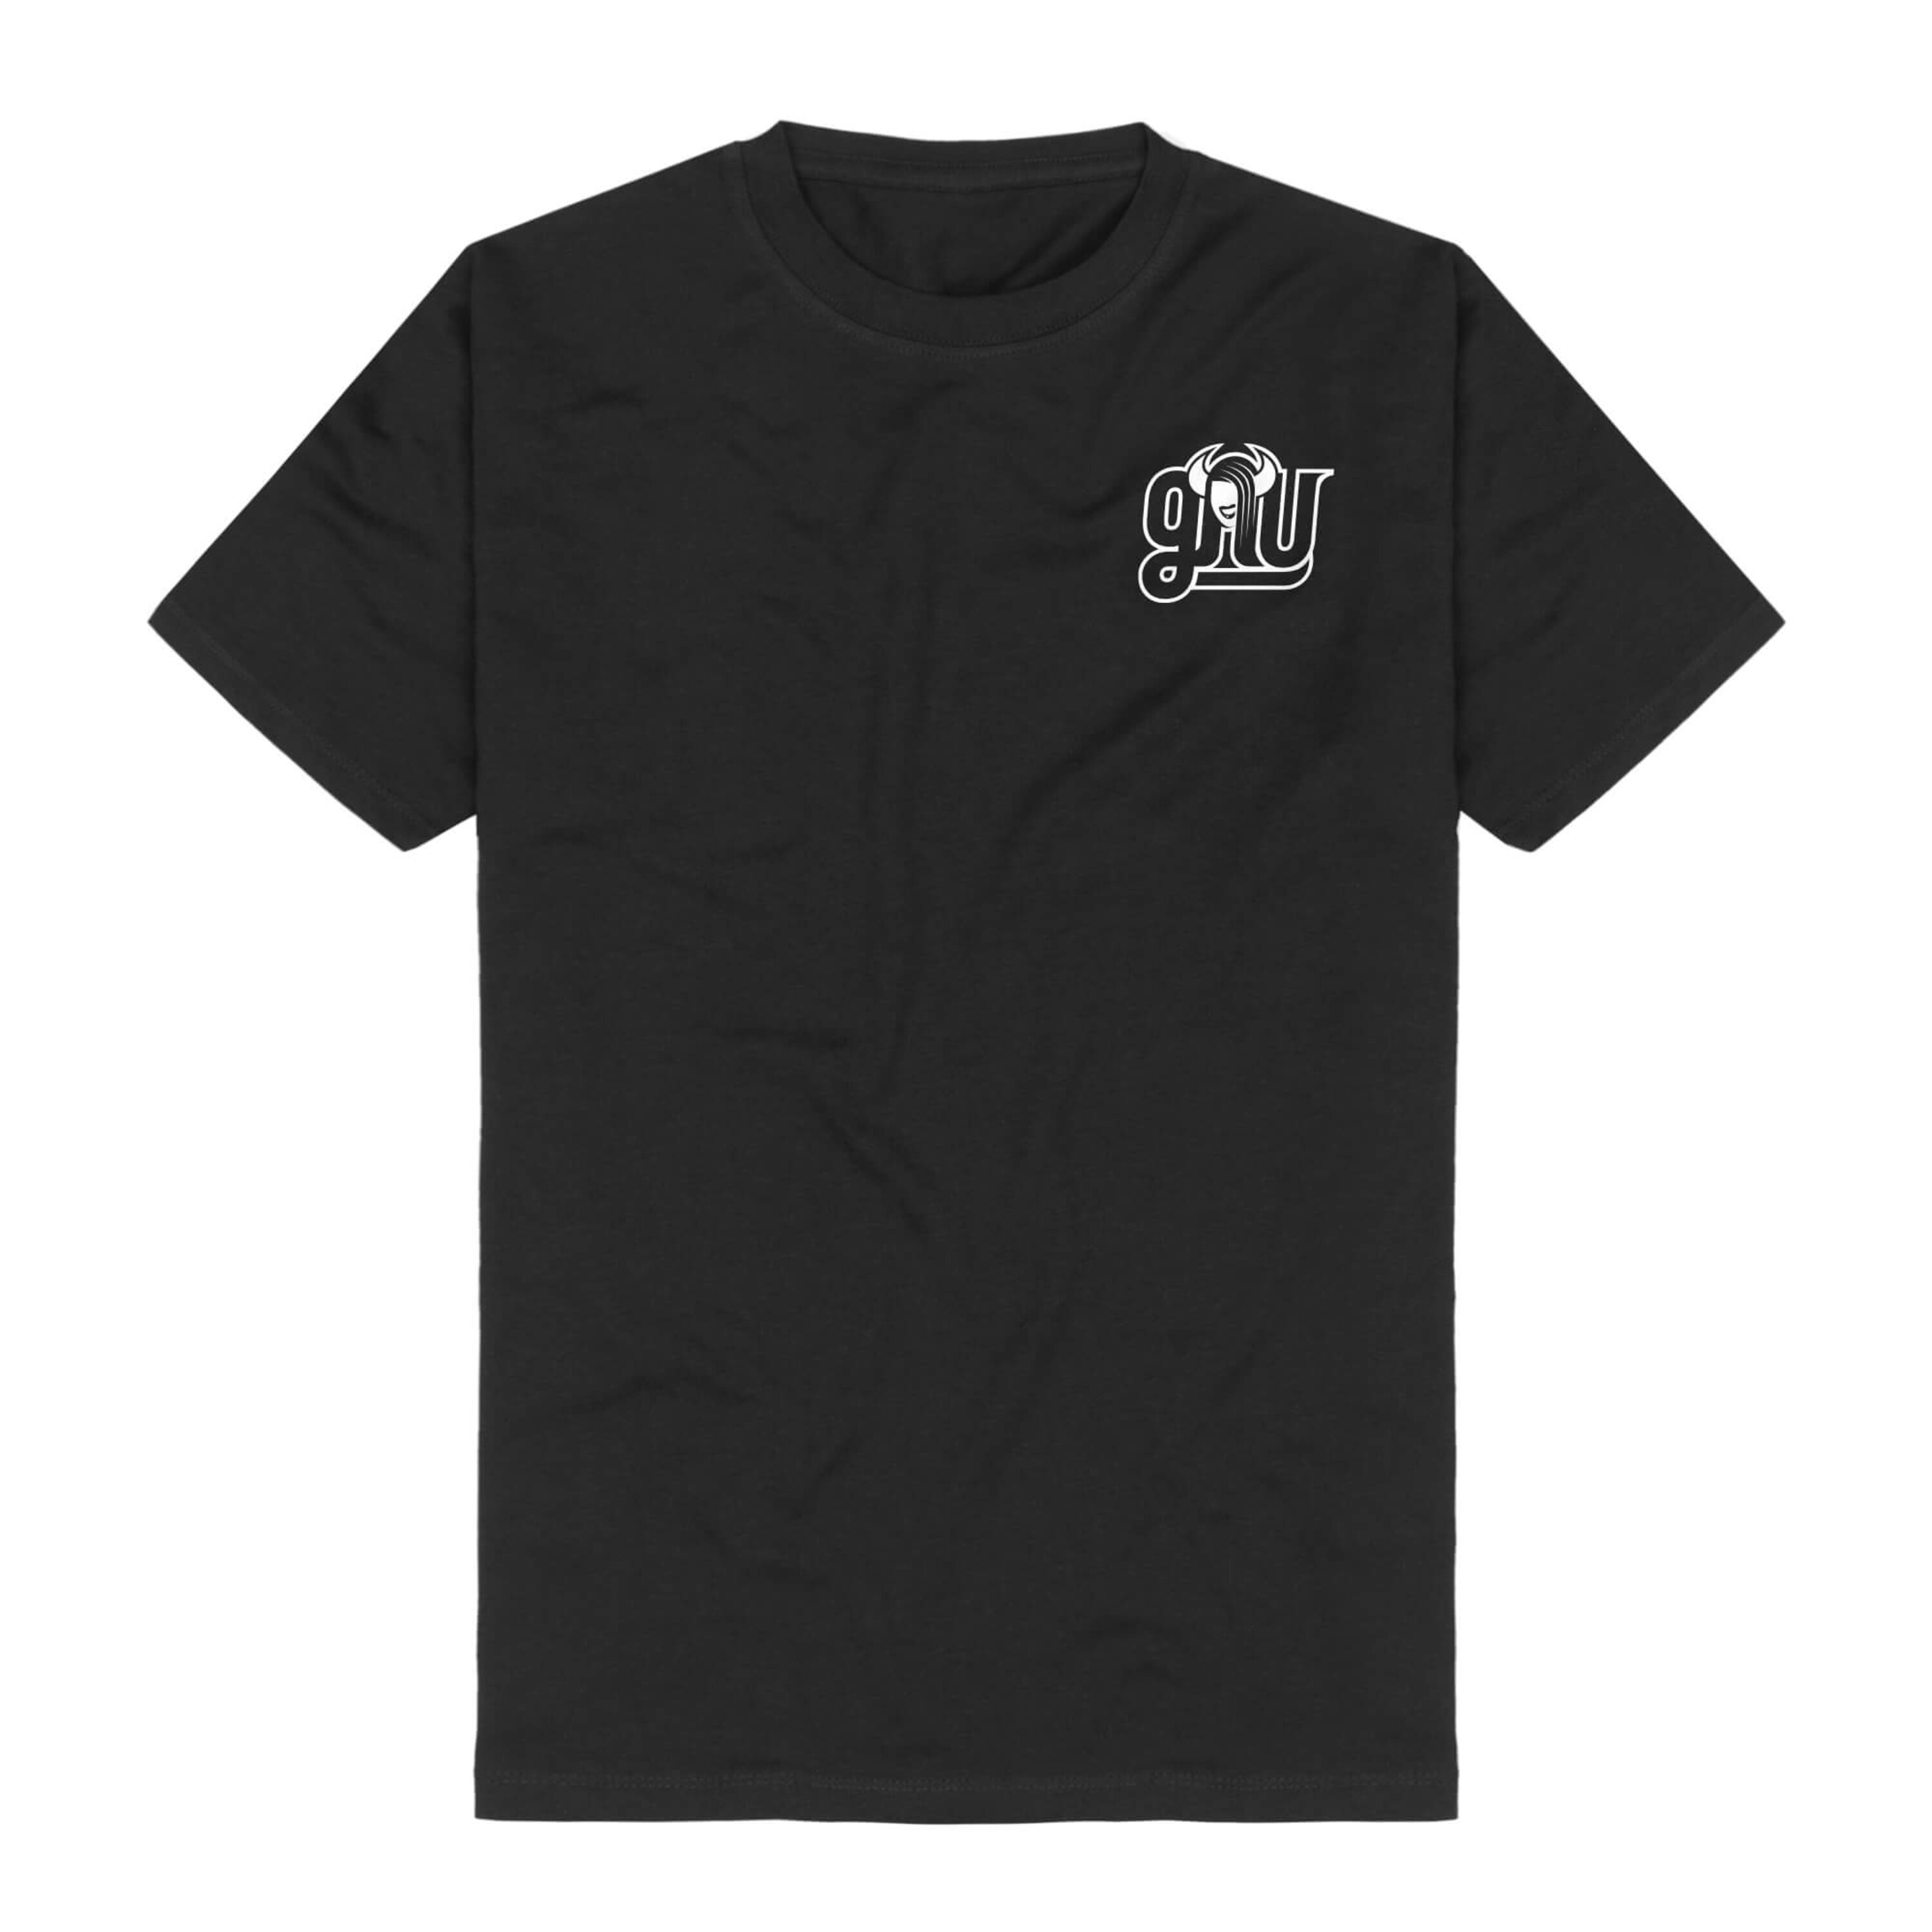 GNU Shop - Pocket Logo - GNU - T-Shirt